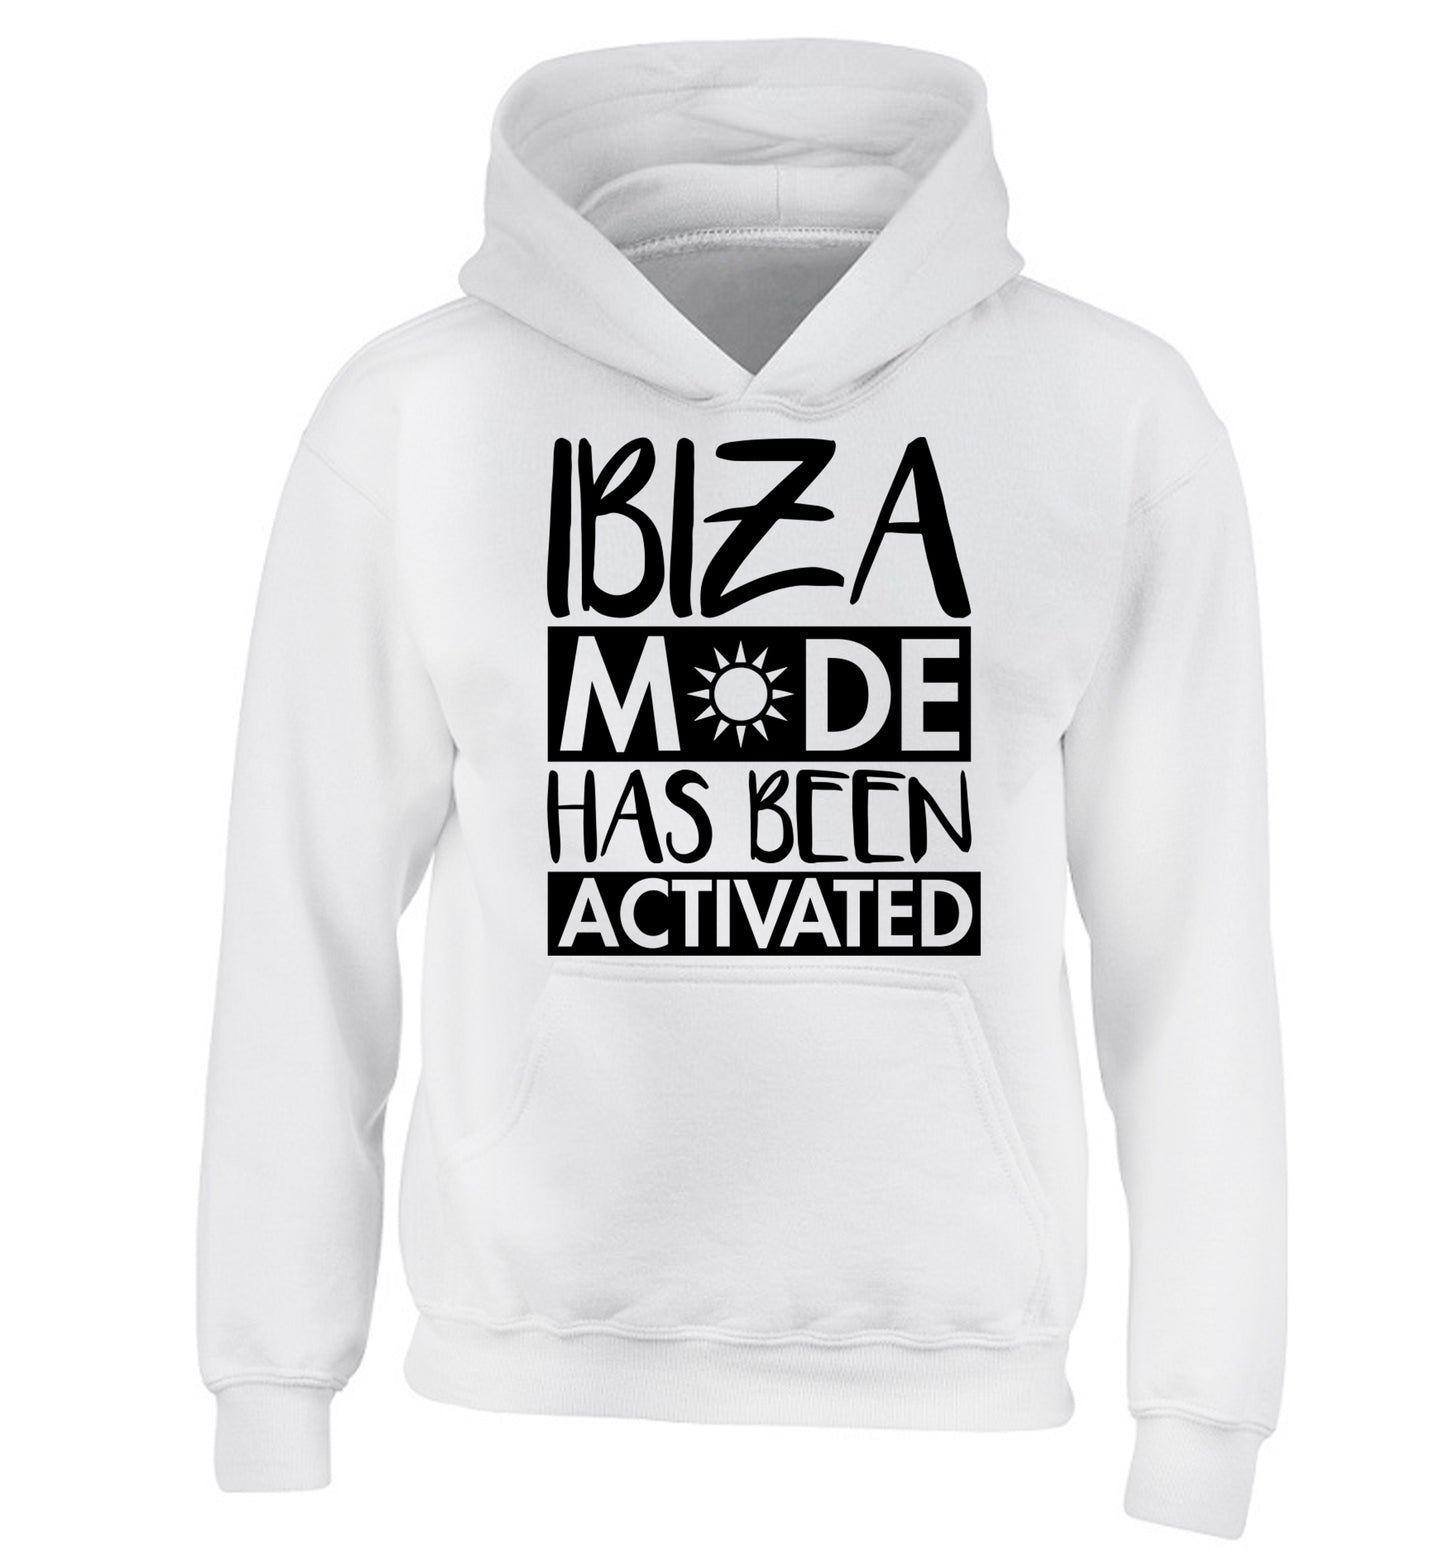 Ibiza mode has been activated children's white hoodie 12-13 Years